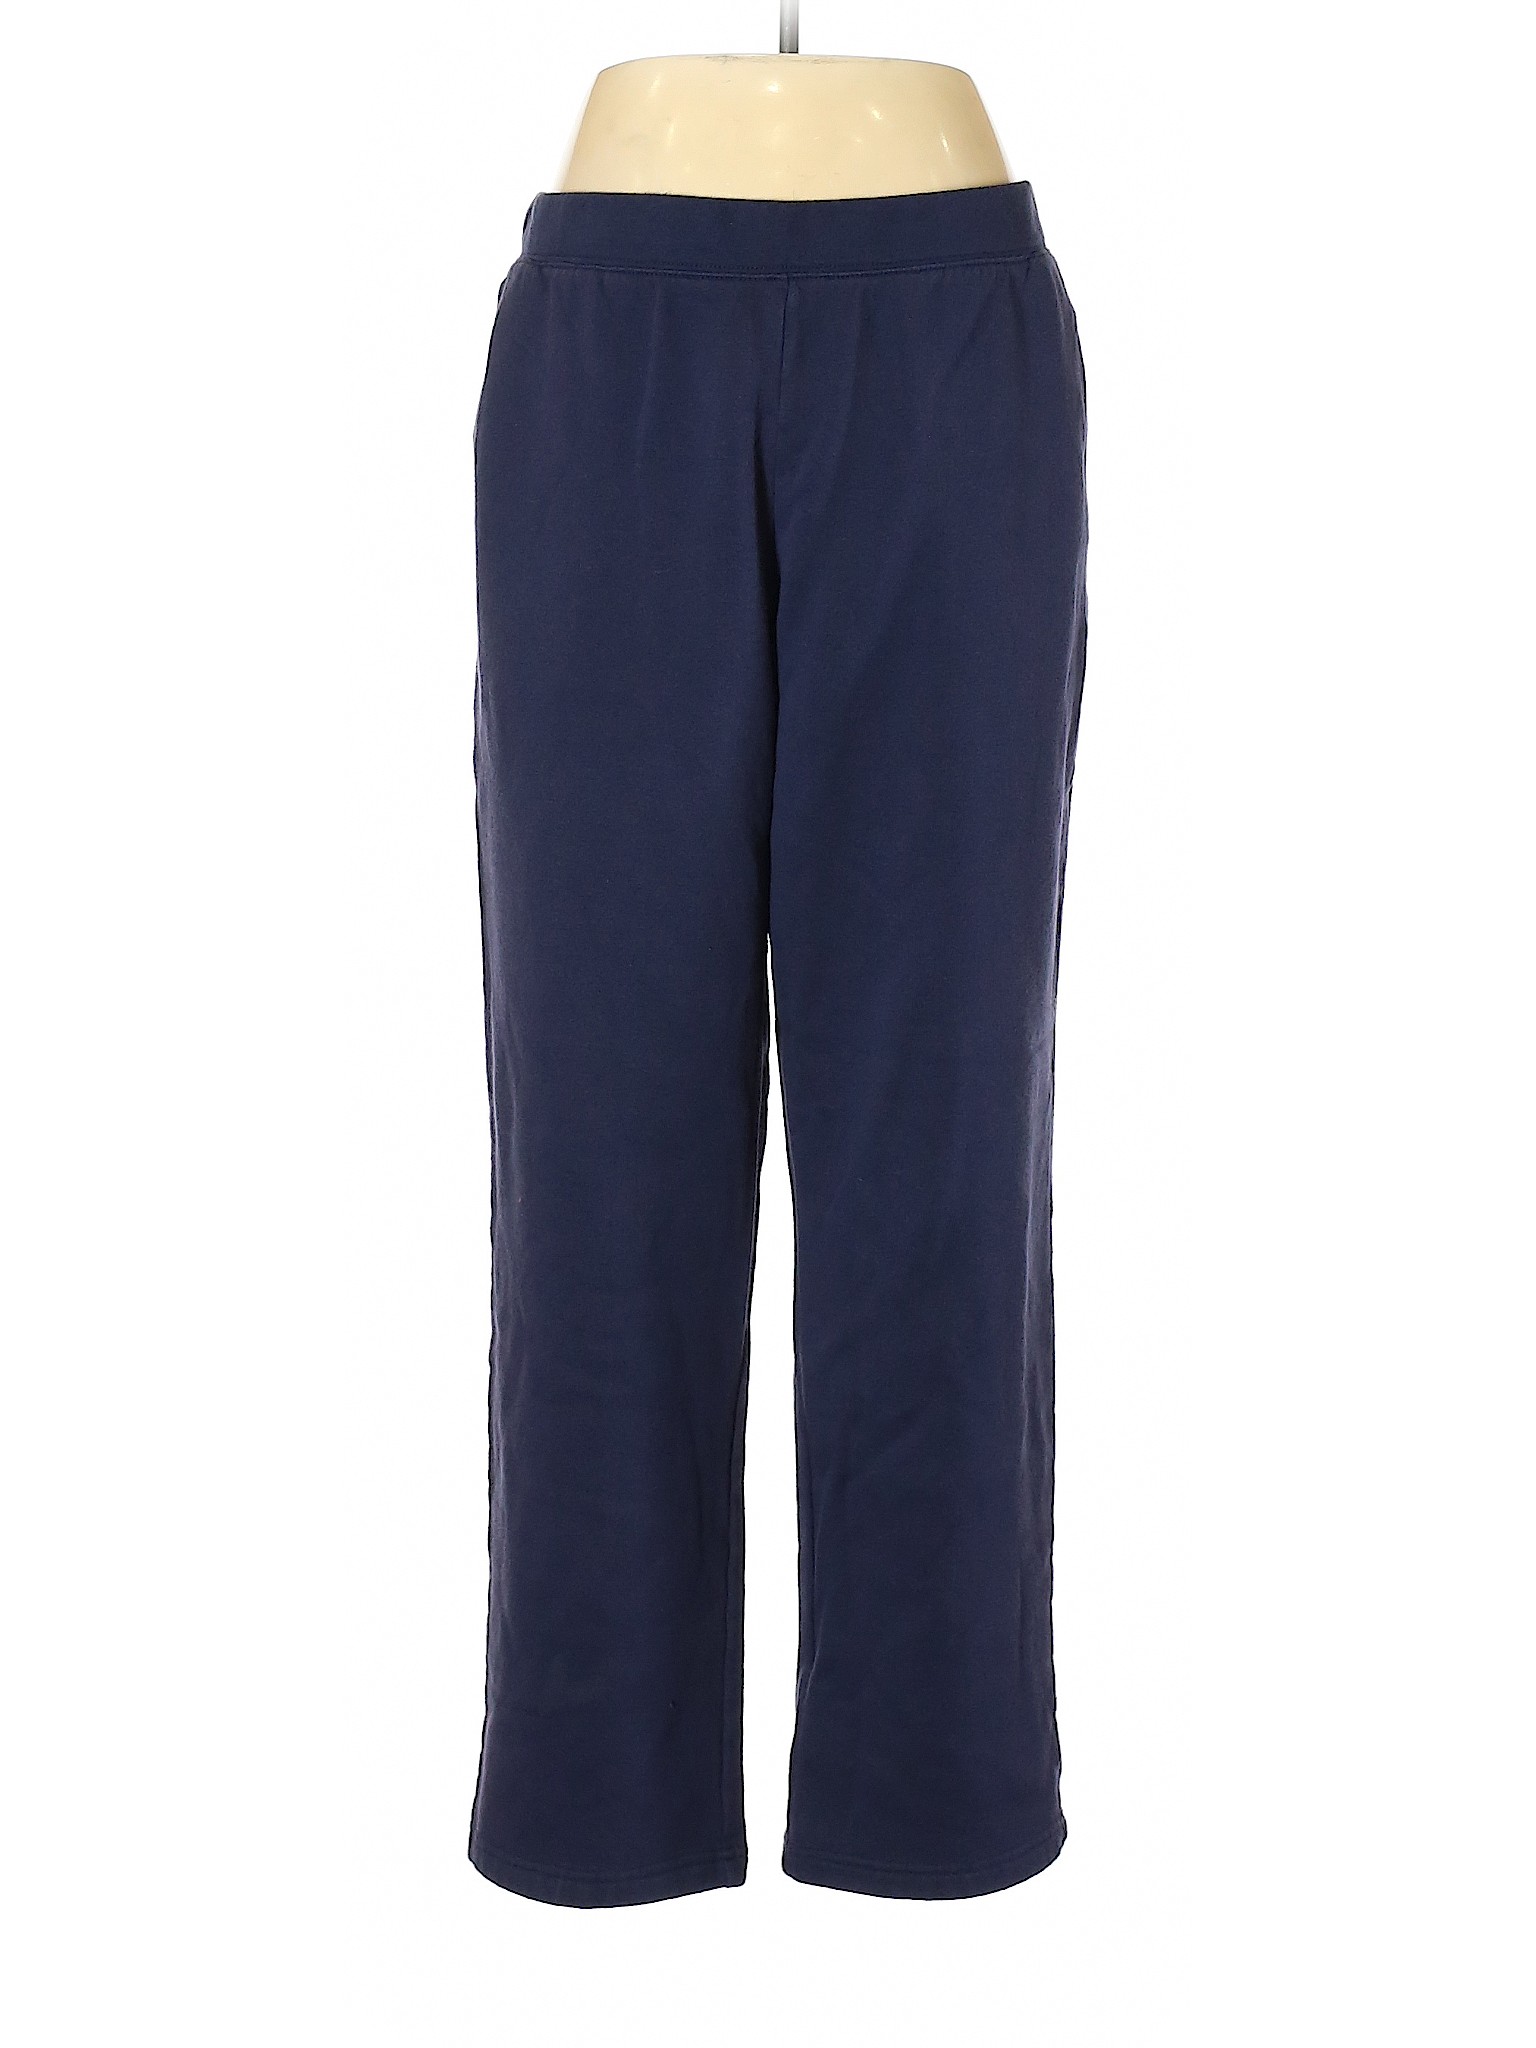 Karen Scott Sport Solid Blue Active Pants Size L - 66% off | thredUP